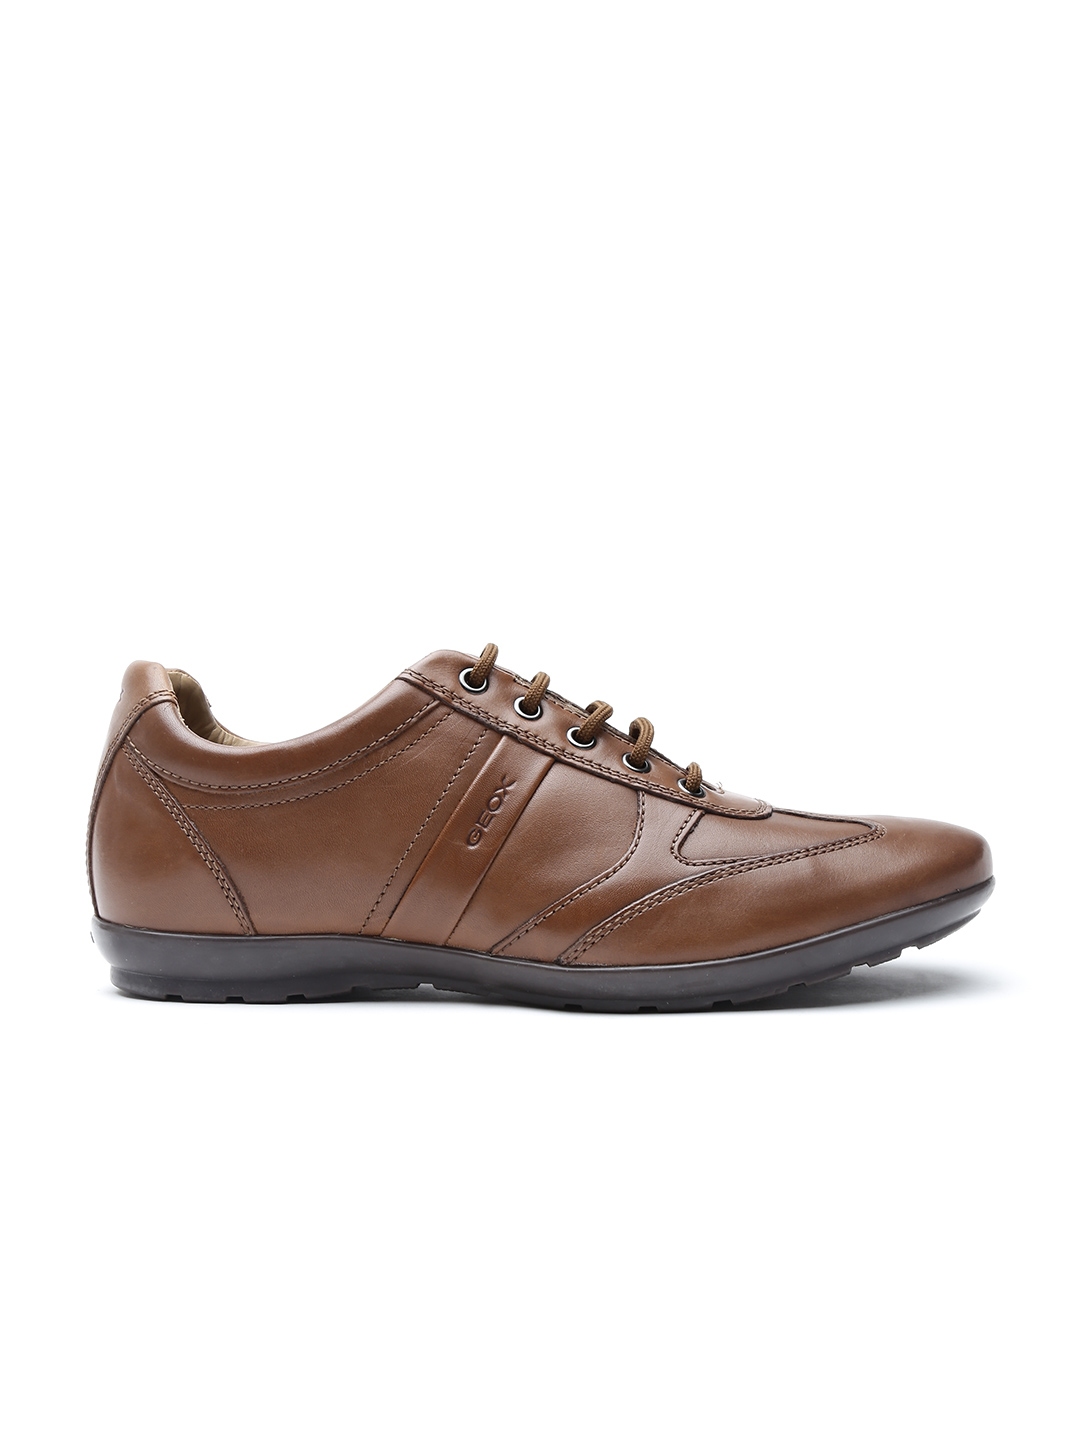 Buy GEOX Respira Men Brown Italian Patent Leather Semiformal Shoes ...